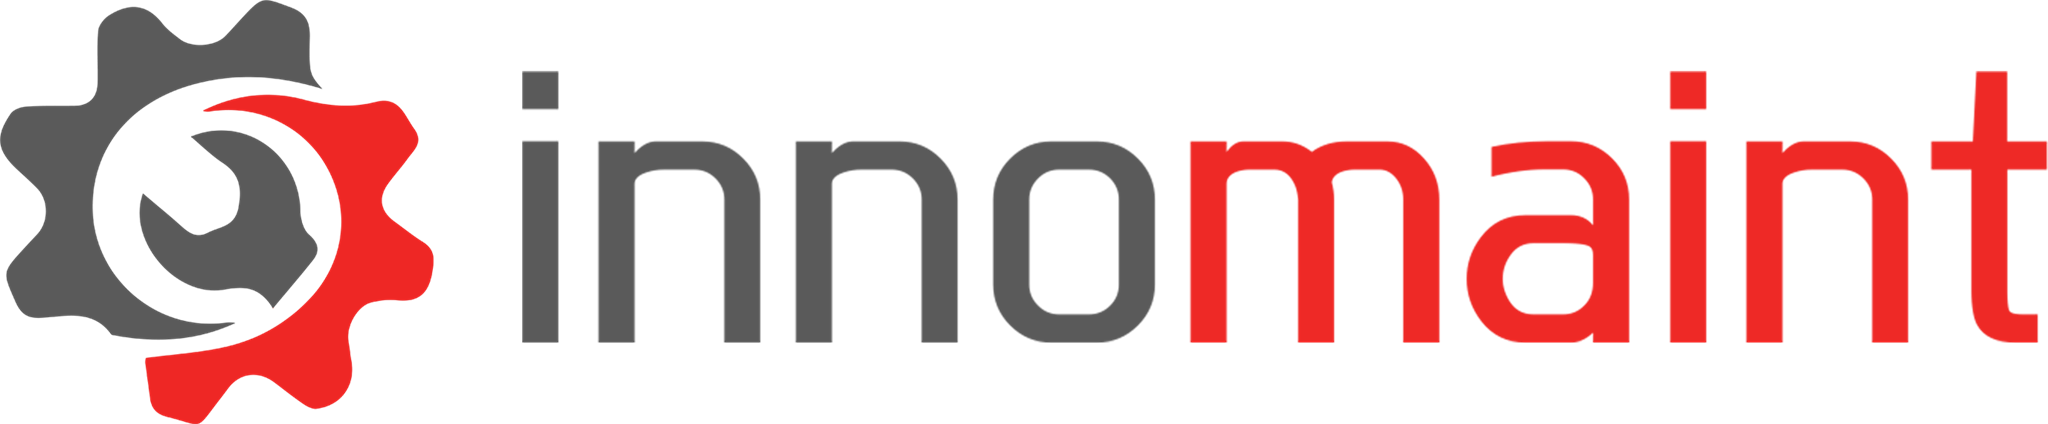 Innomaint logo